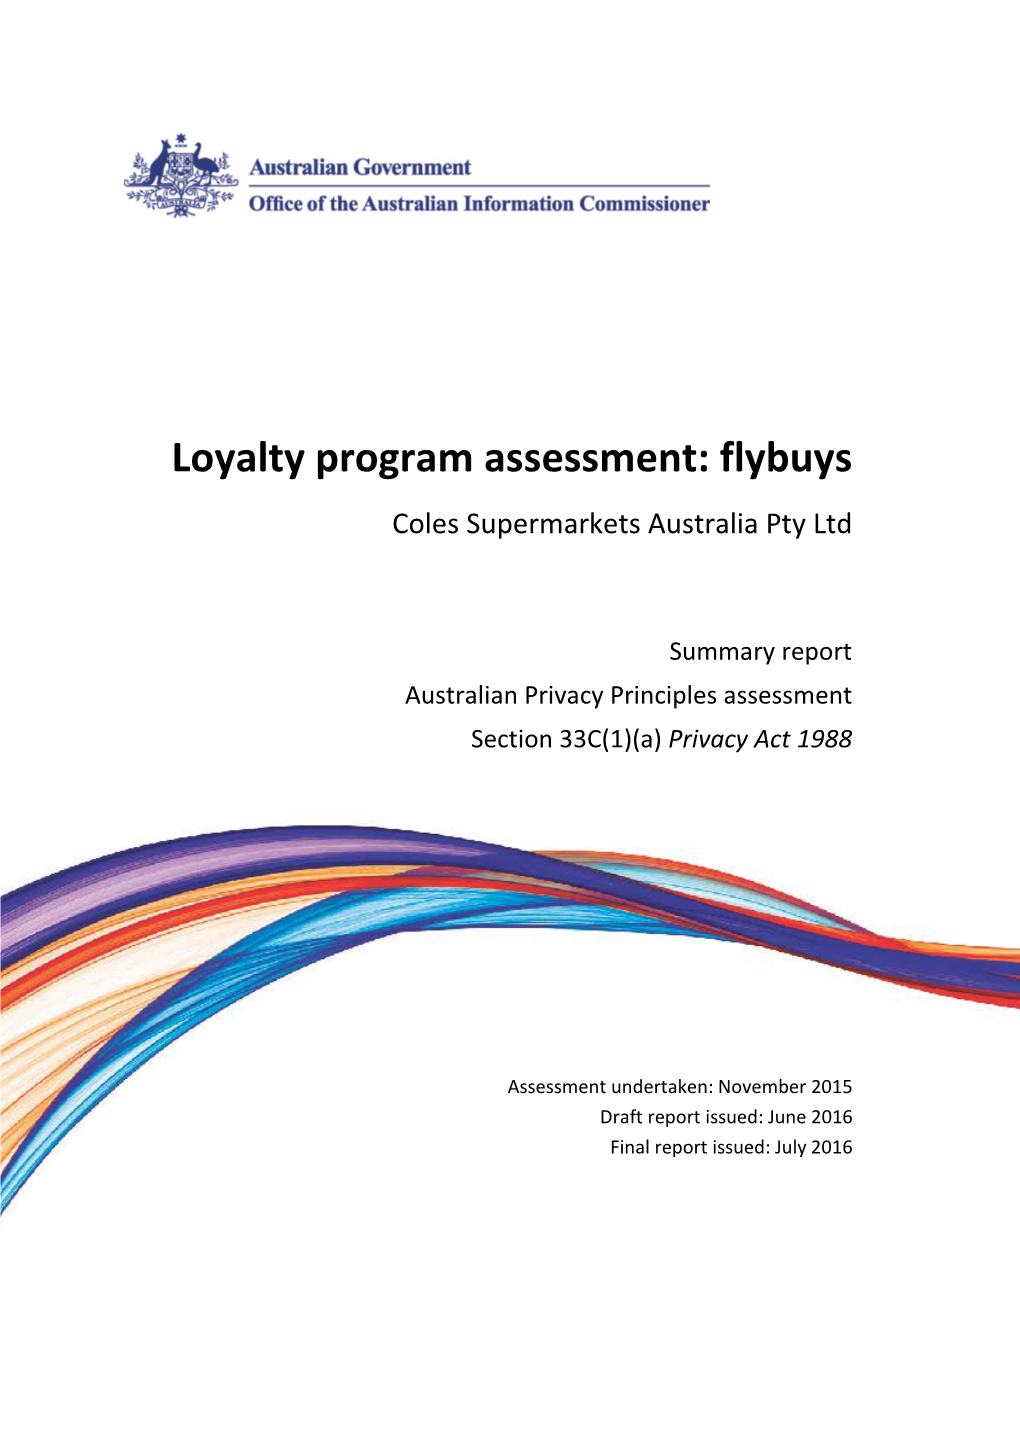 Flybuys Coles Supermarkets Australia Pty Ltd